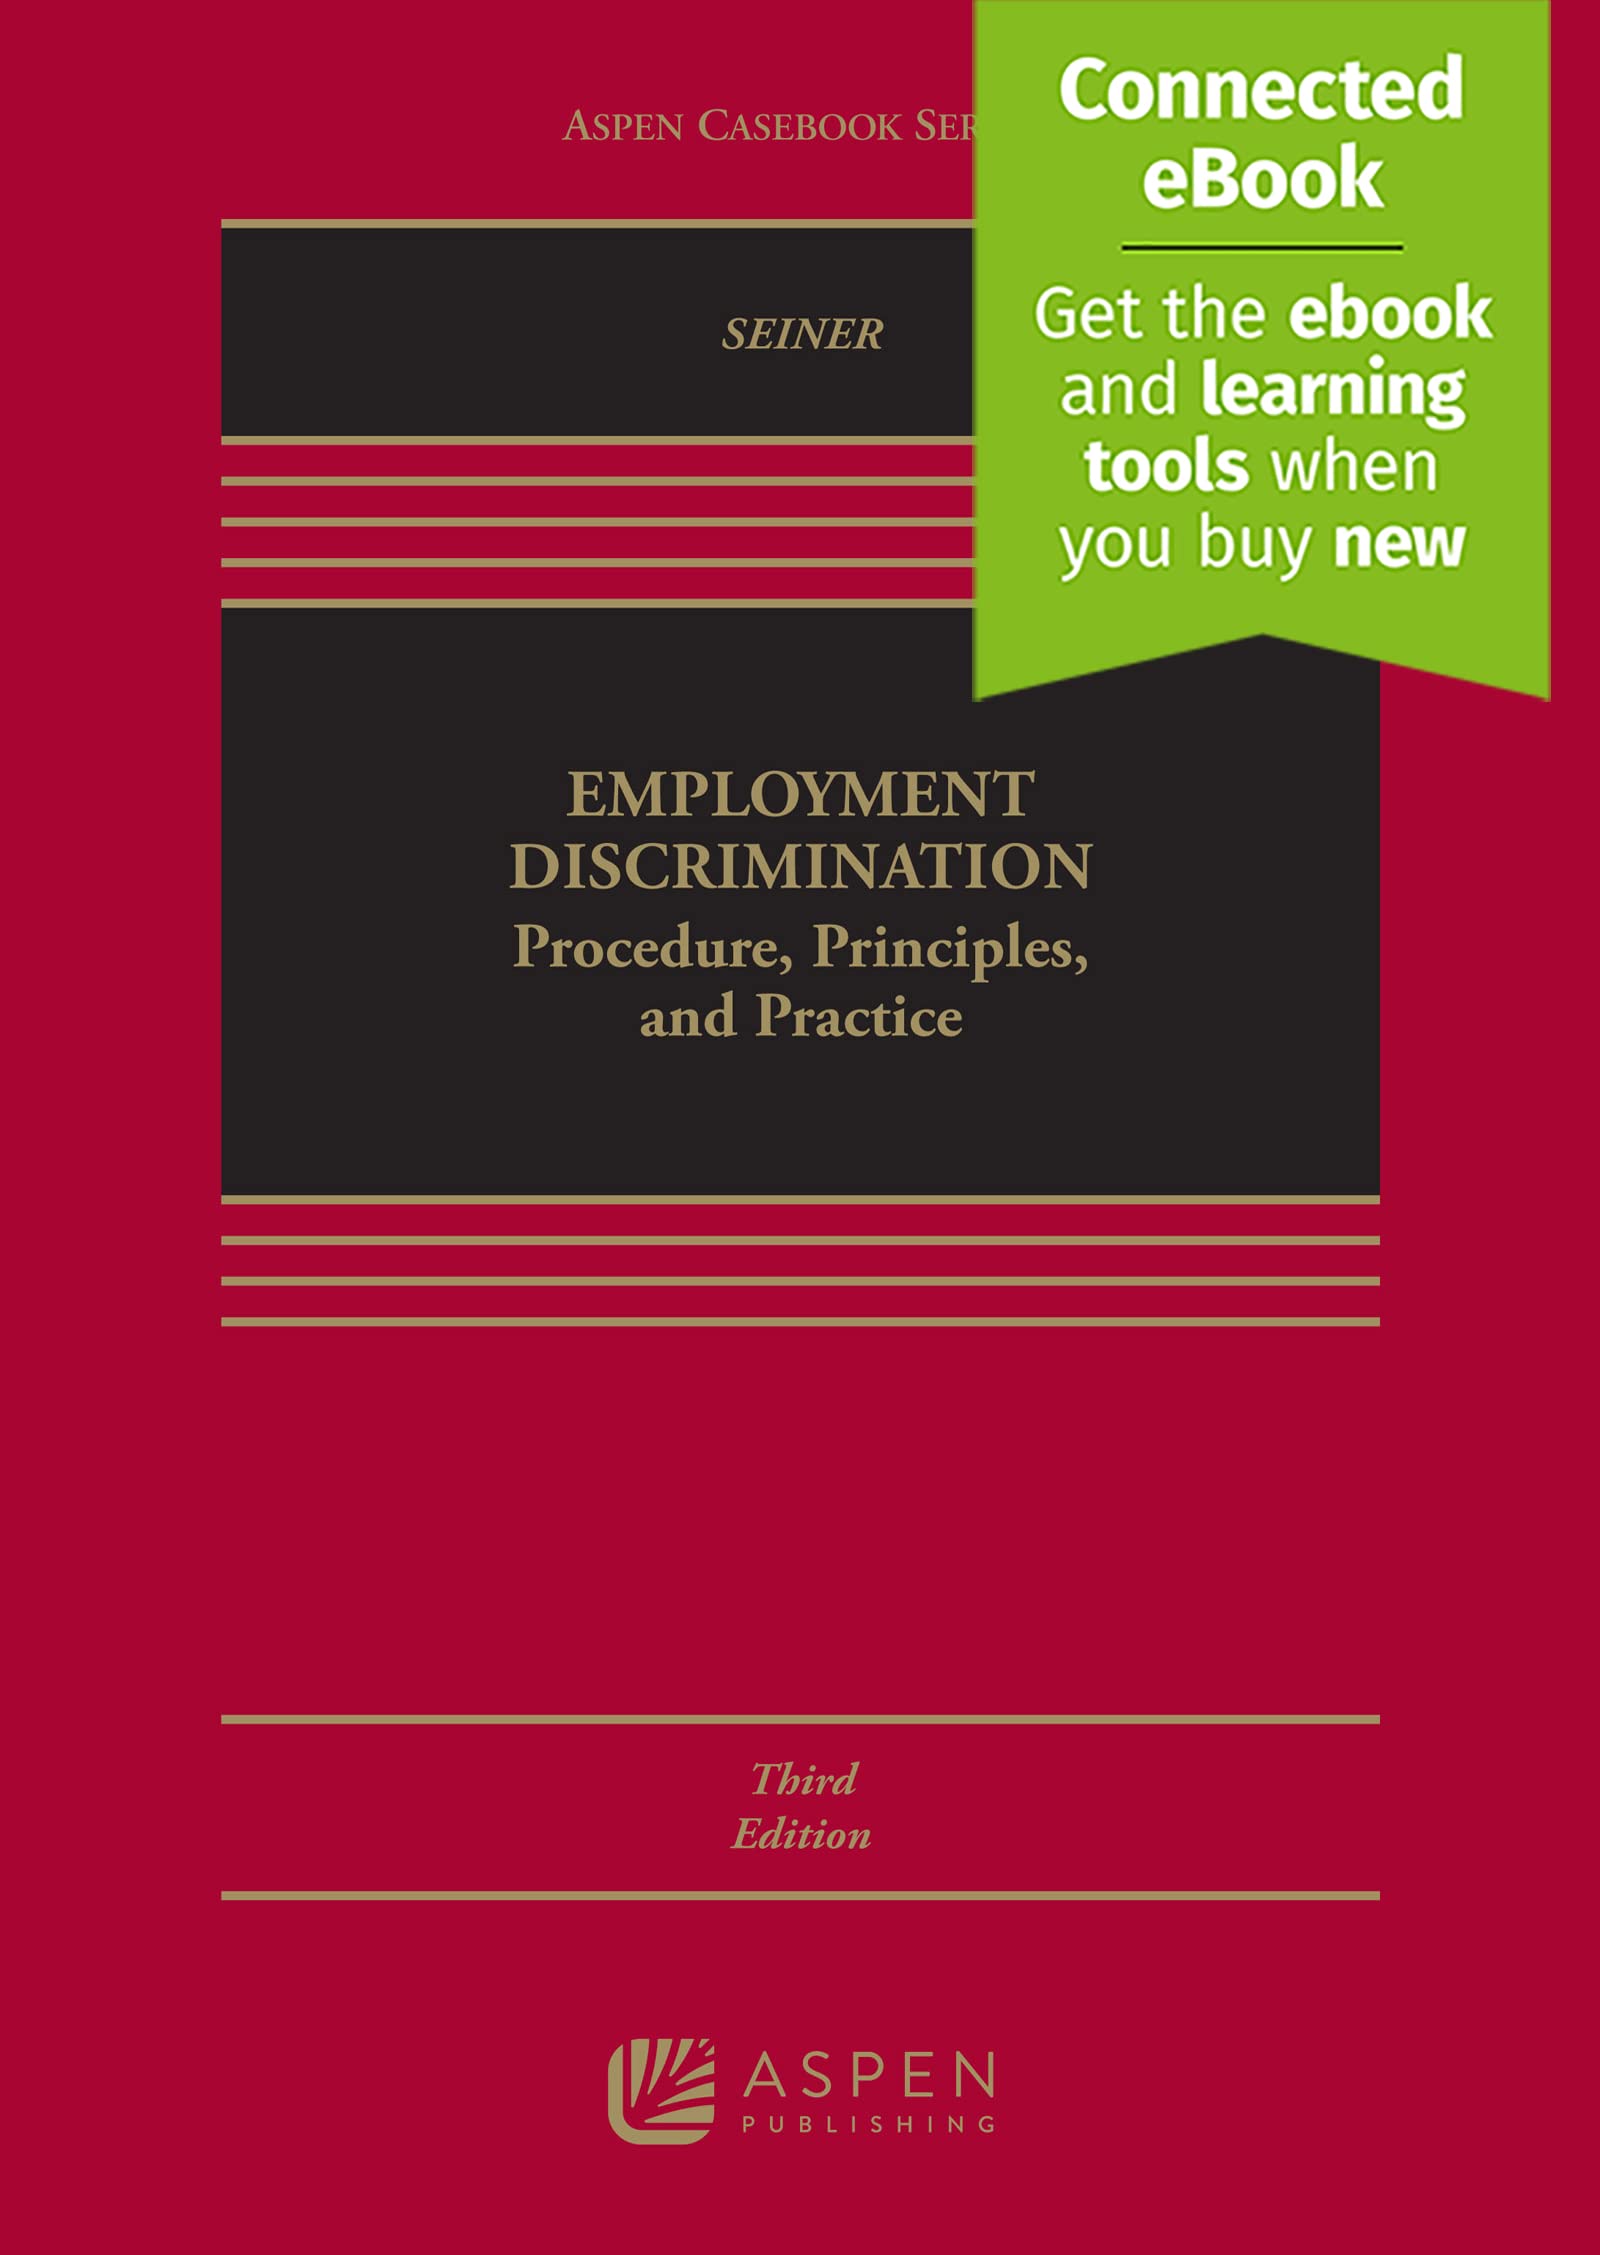 Employment Discrimination: Procedure, Principles, and Practice [Connected eBook] (The Aspen Casebooks)